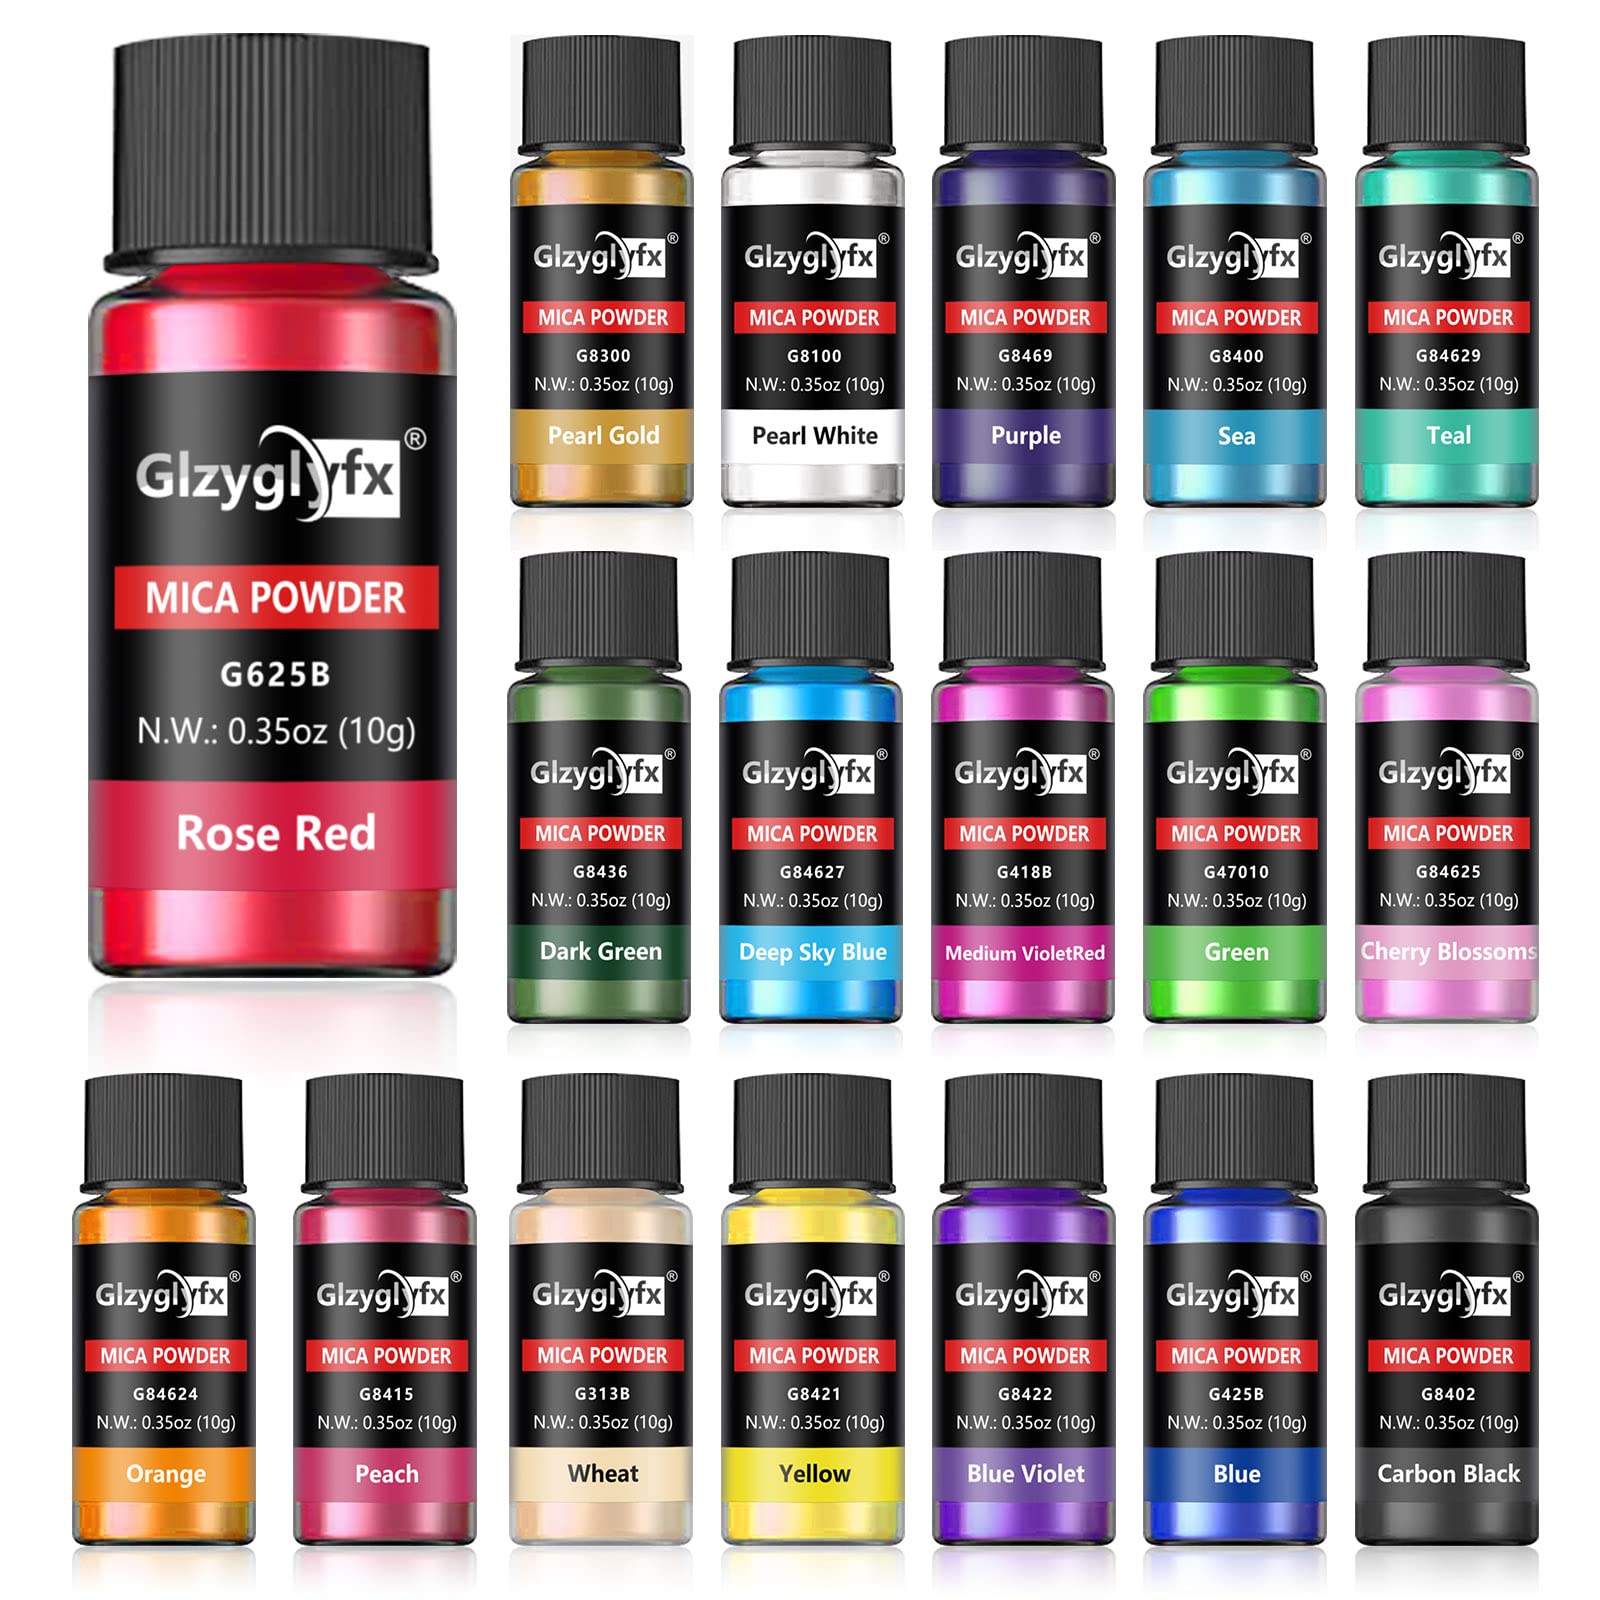 Eye Candy rainbow Blue Mica Pigment Powder Multipurpose Natural Bath Bombs,  Resin, Paint, Epoxy, Soap, Nail Polish, Lip Balm 